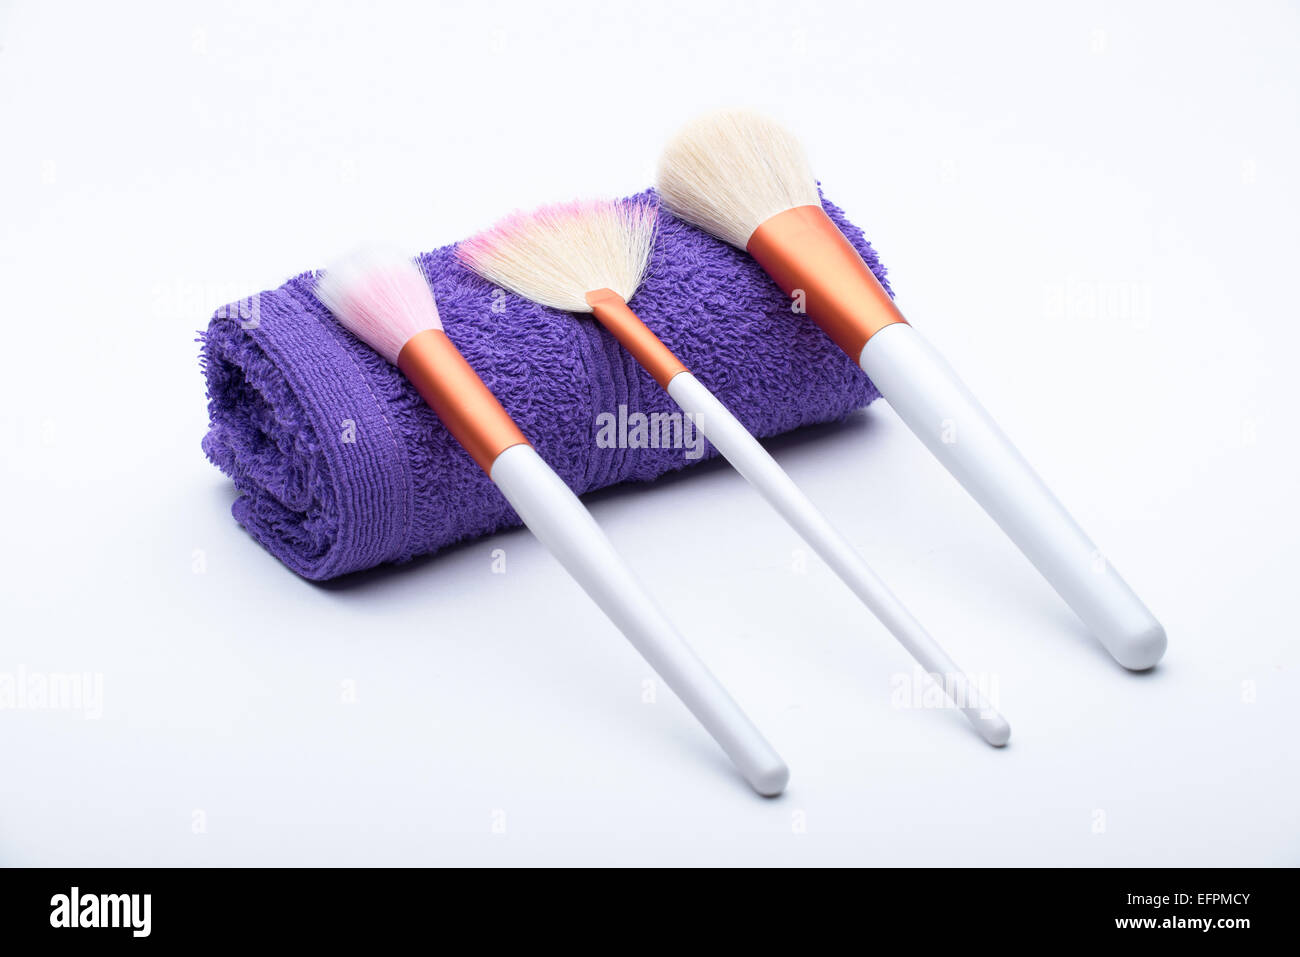 Makeup Brushes on purple towel Stock Photo